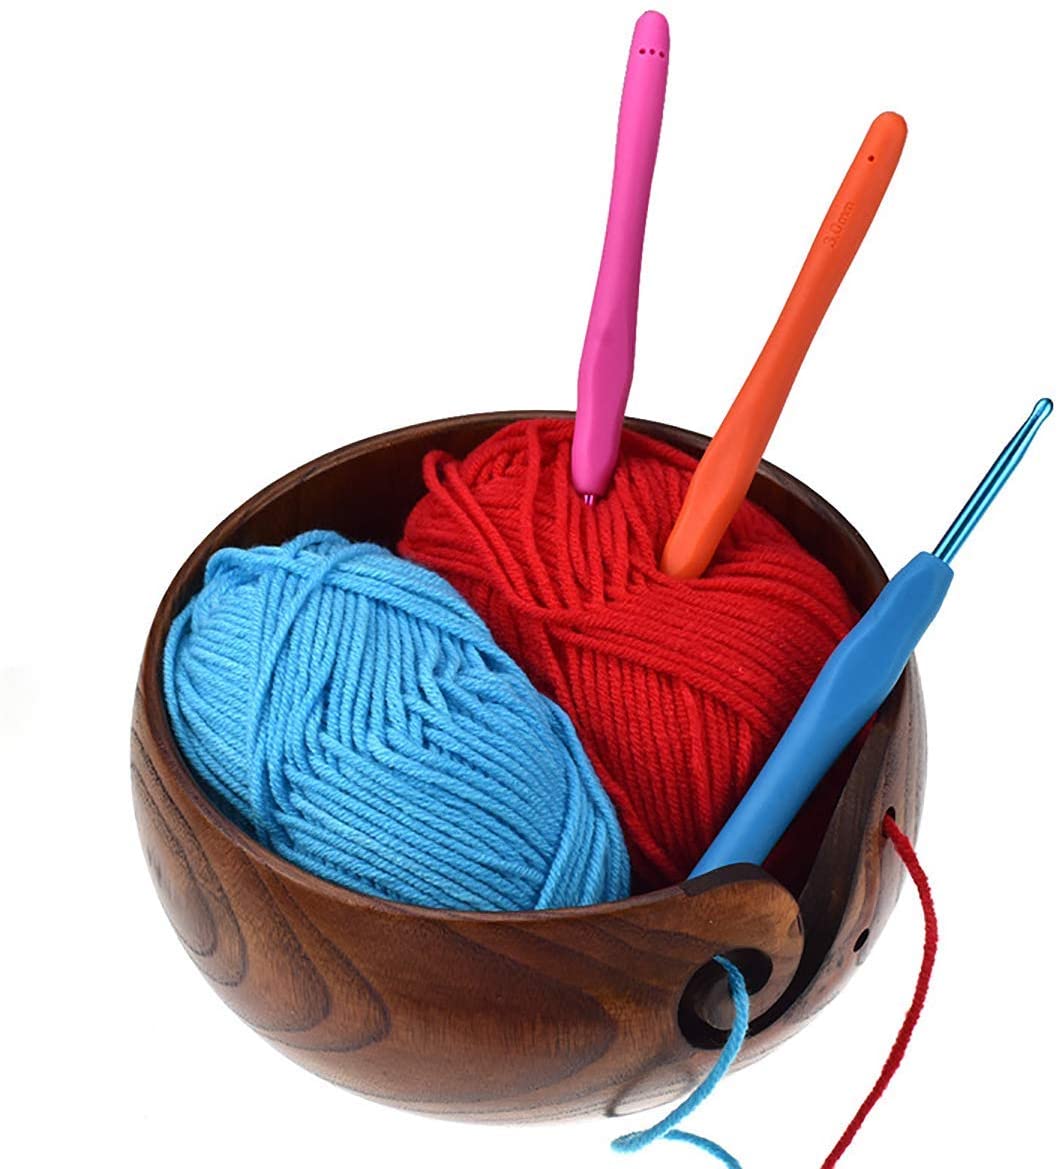 CraftsCapitol™ Wooden Yarn Bowl Knitting Yarn Bowl [BUY 1 GET 1 FREE]